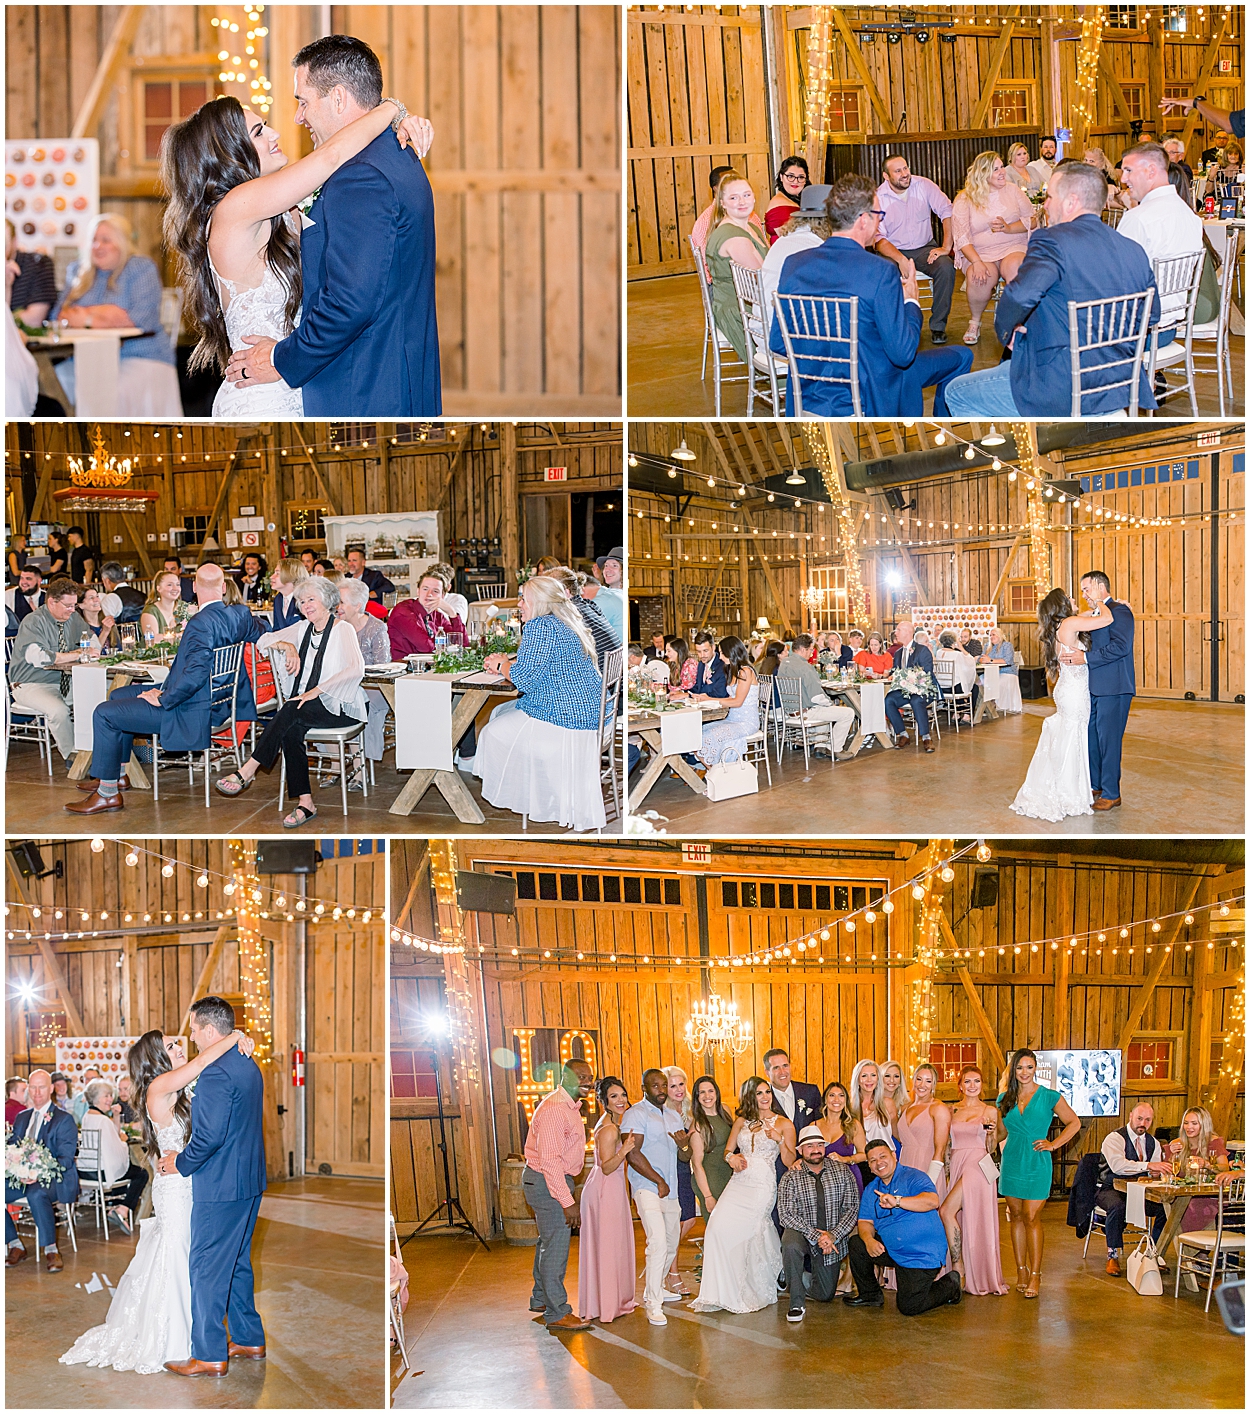 Windmill Winery Wedding Barn Reception, Bride and Groom First Dance